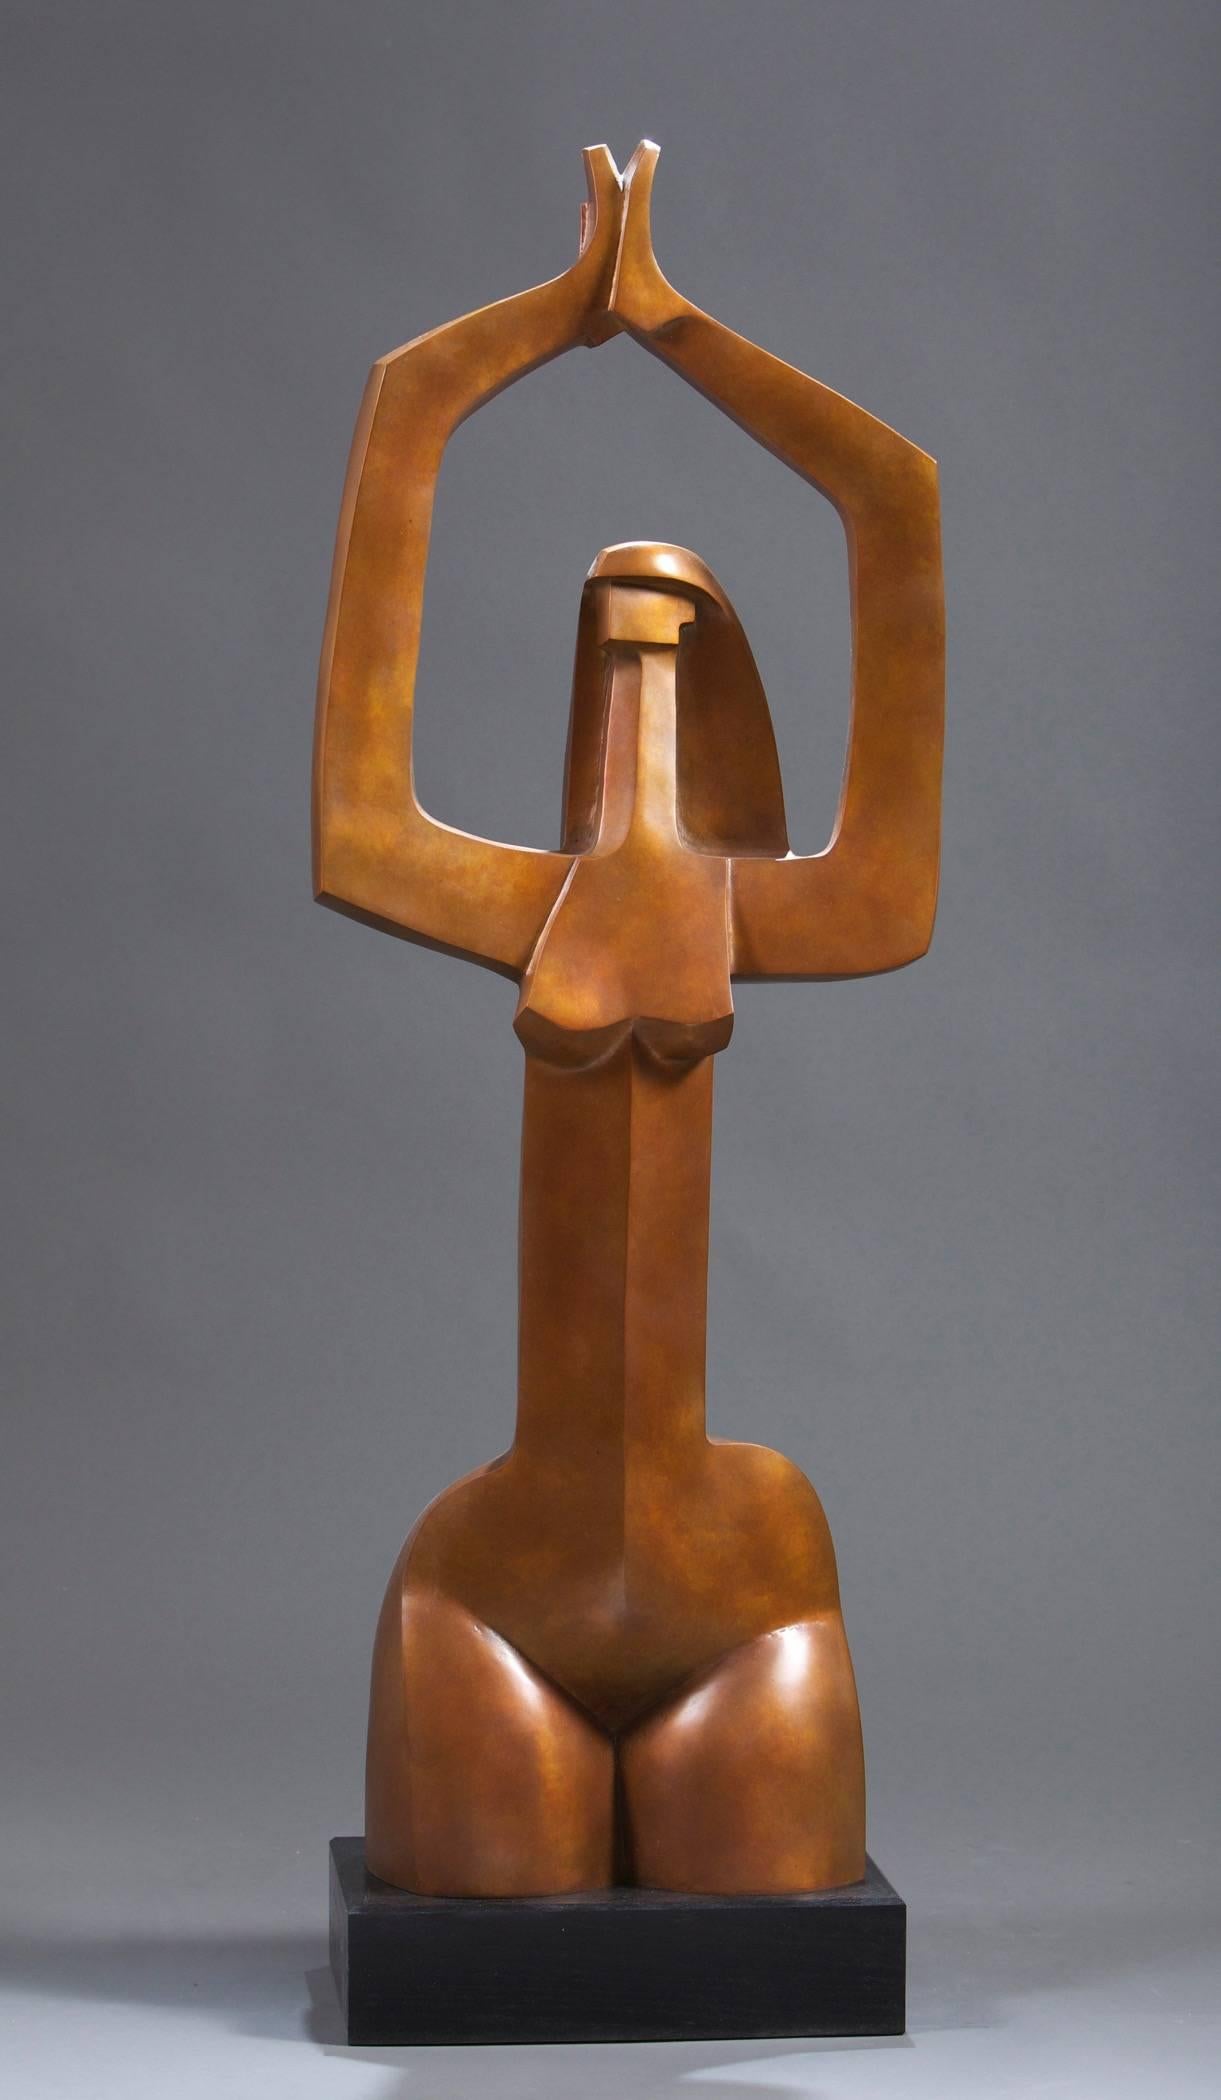 Wayne Salge Figurative Sculpture - "Isabella 3/12" contemporary bronze sculpture of woman kneeling in salute pose